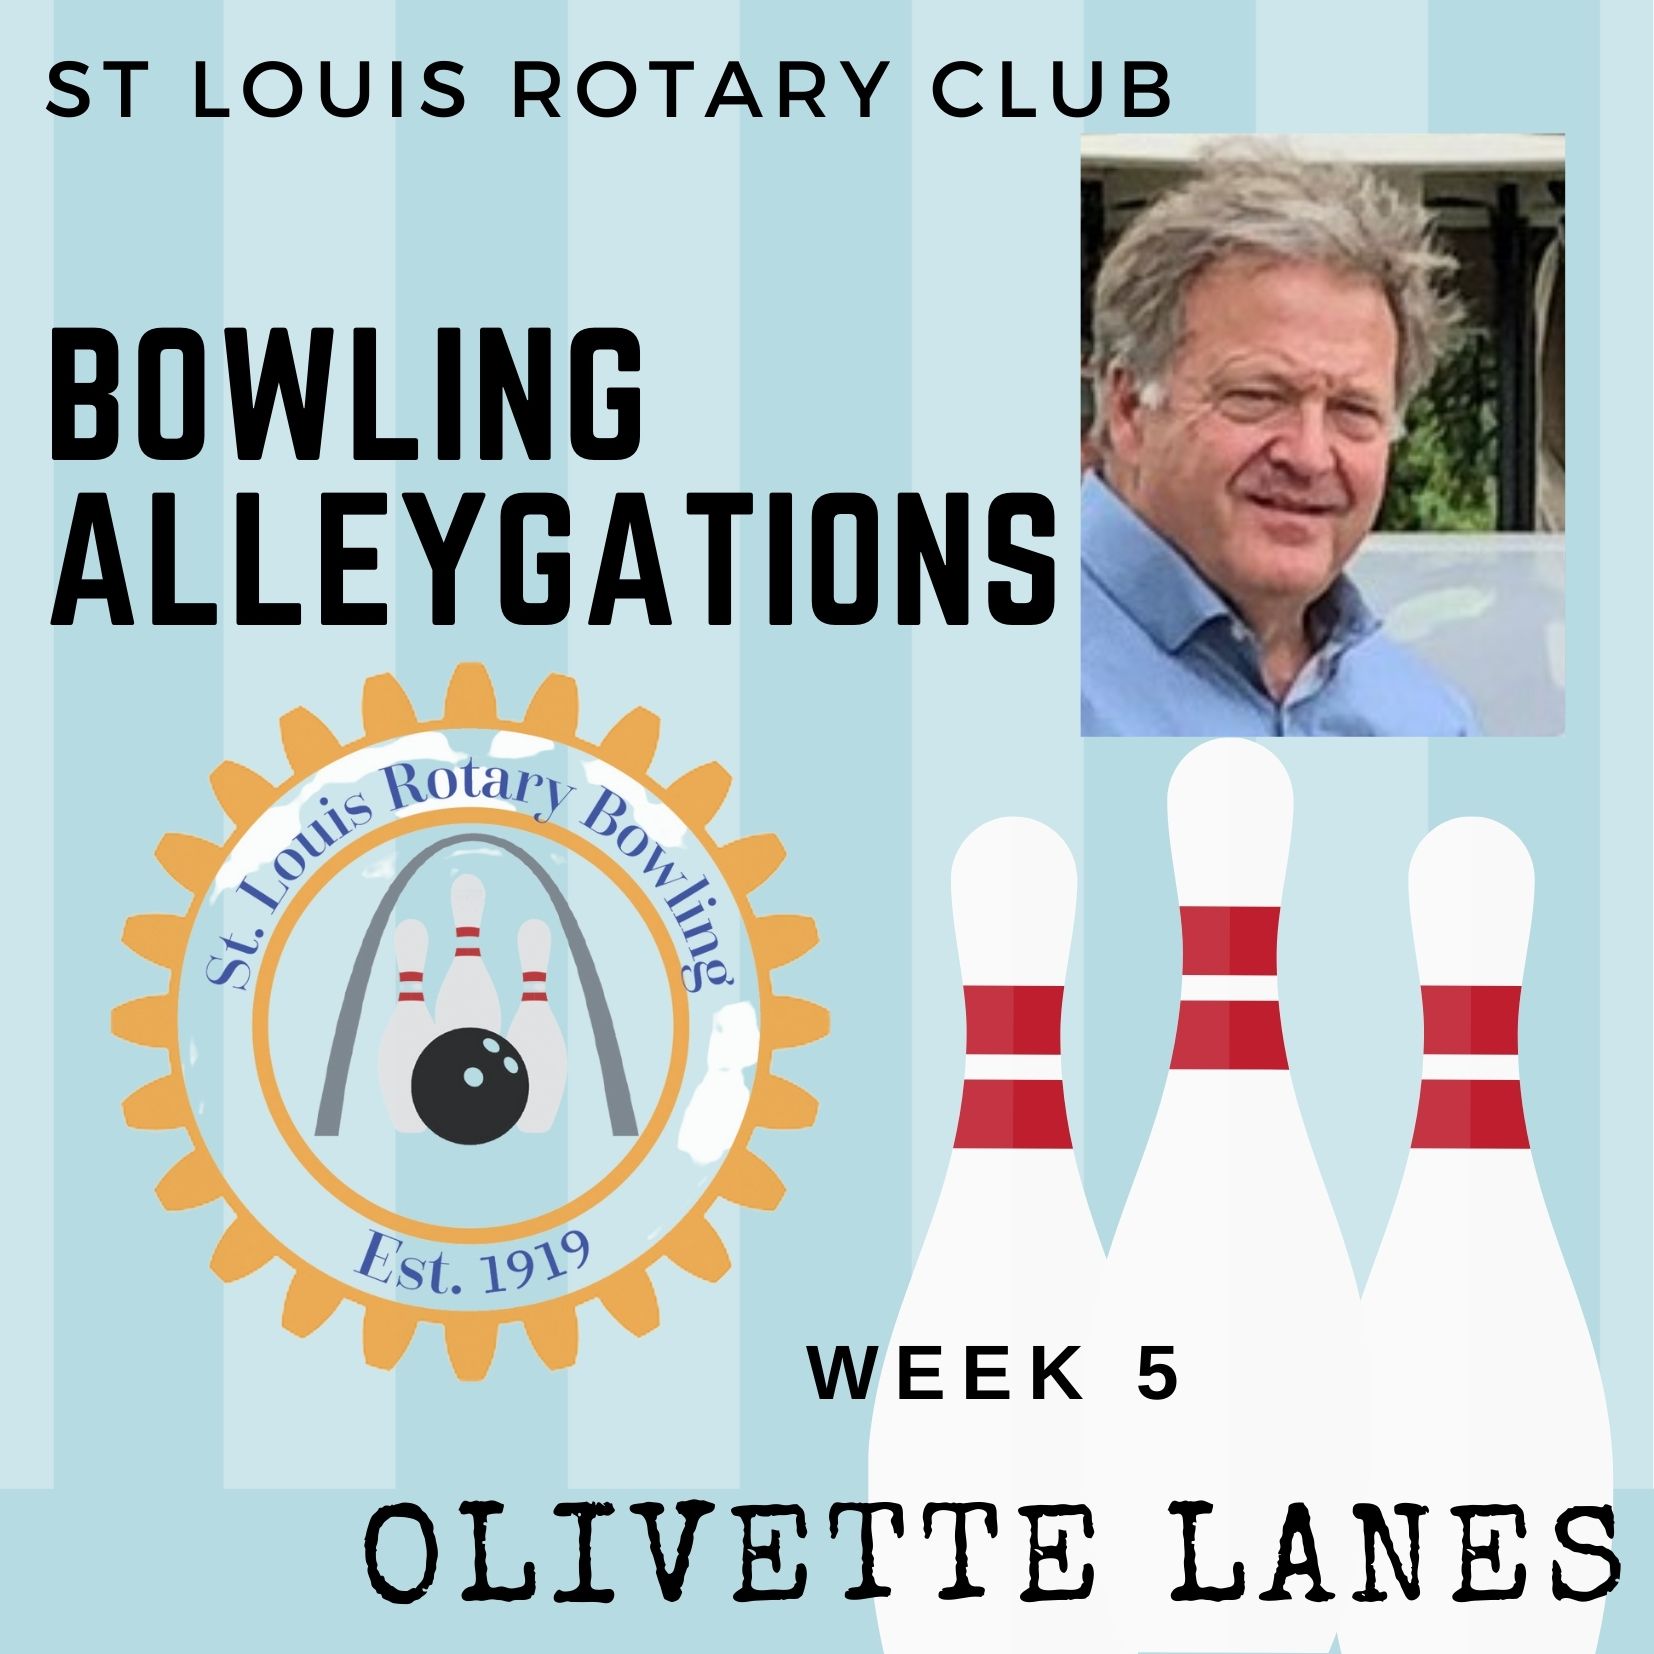 Dan Conway, Bowling Alleygations, Week 5